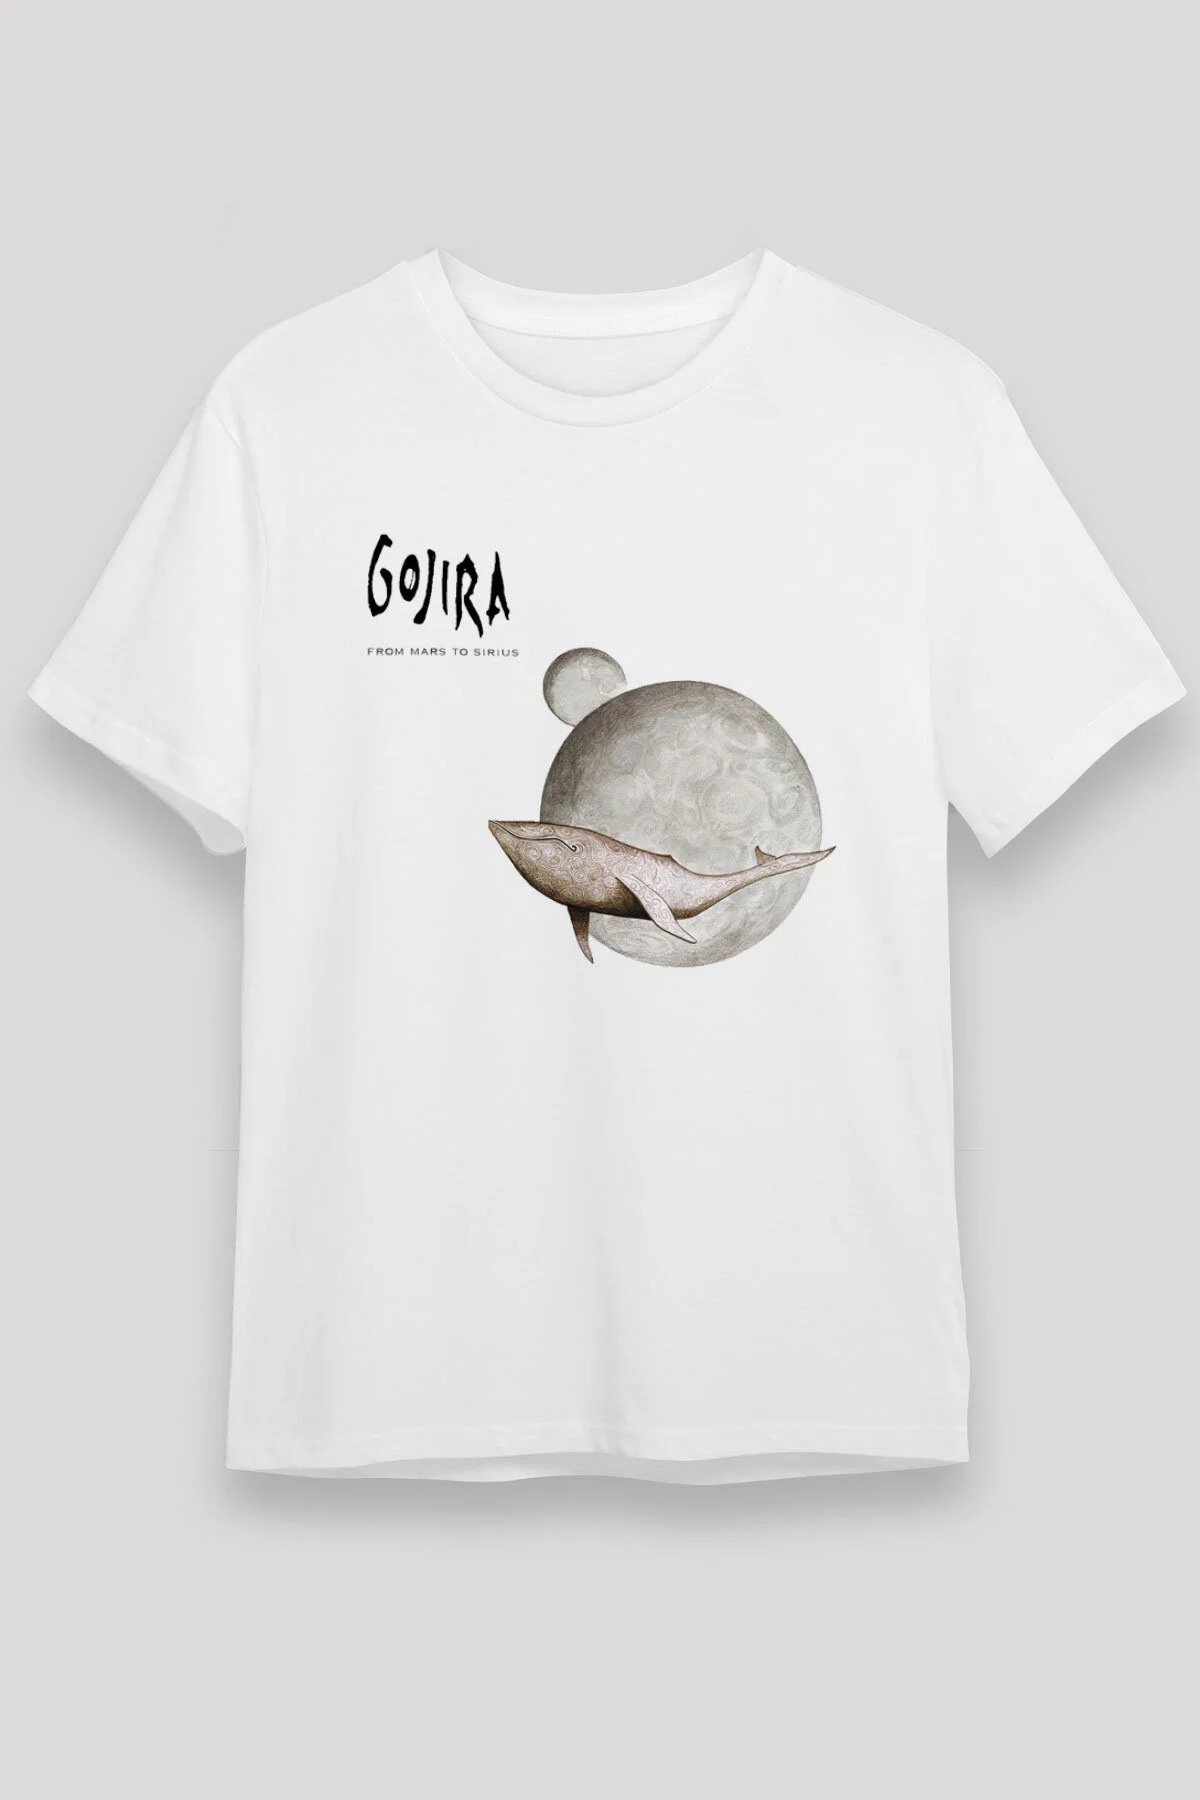 Gojira T shirt , Music Band ,Unisex Tshirt 20